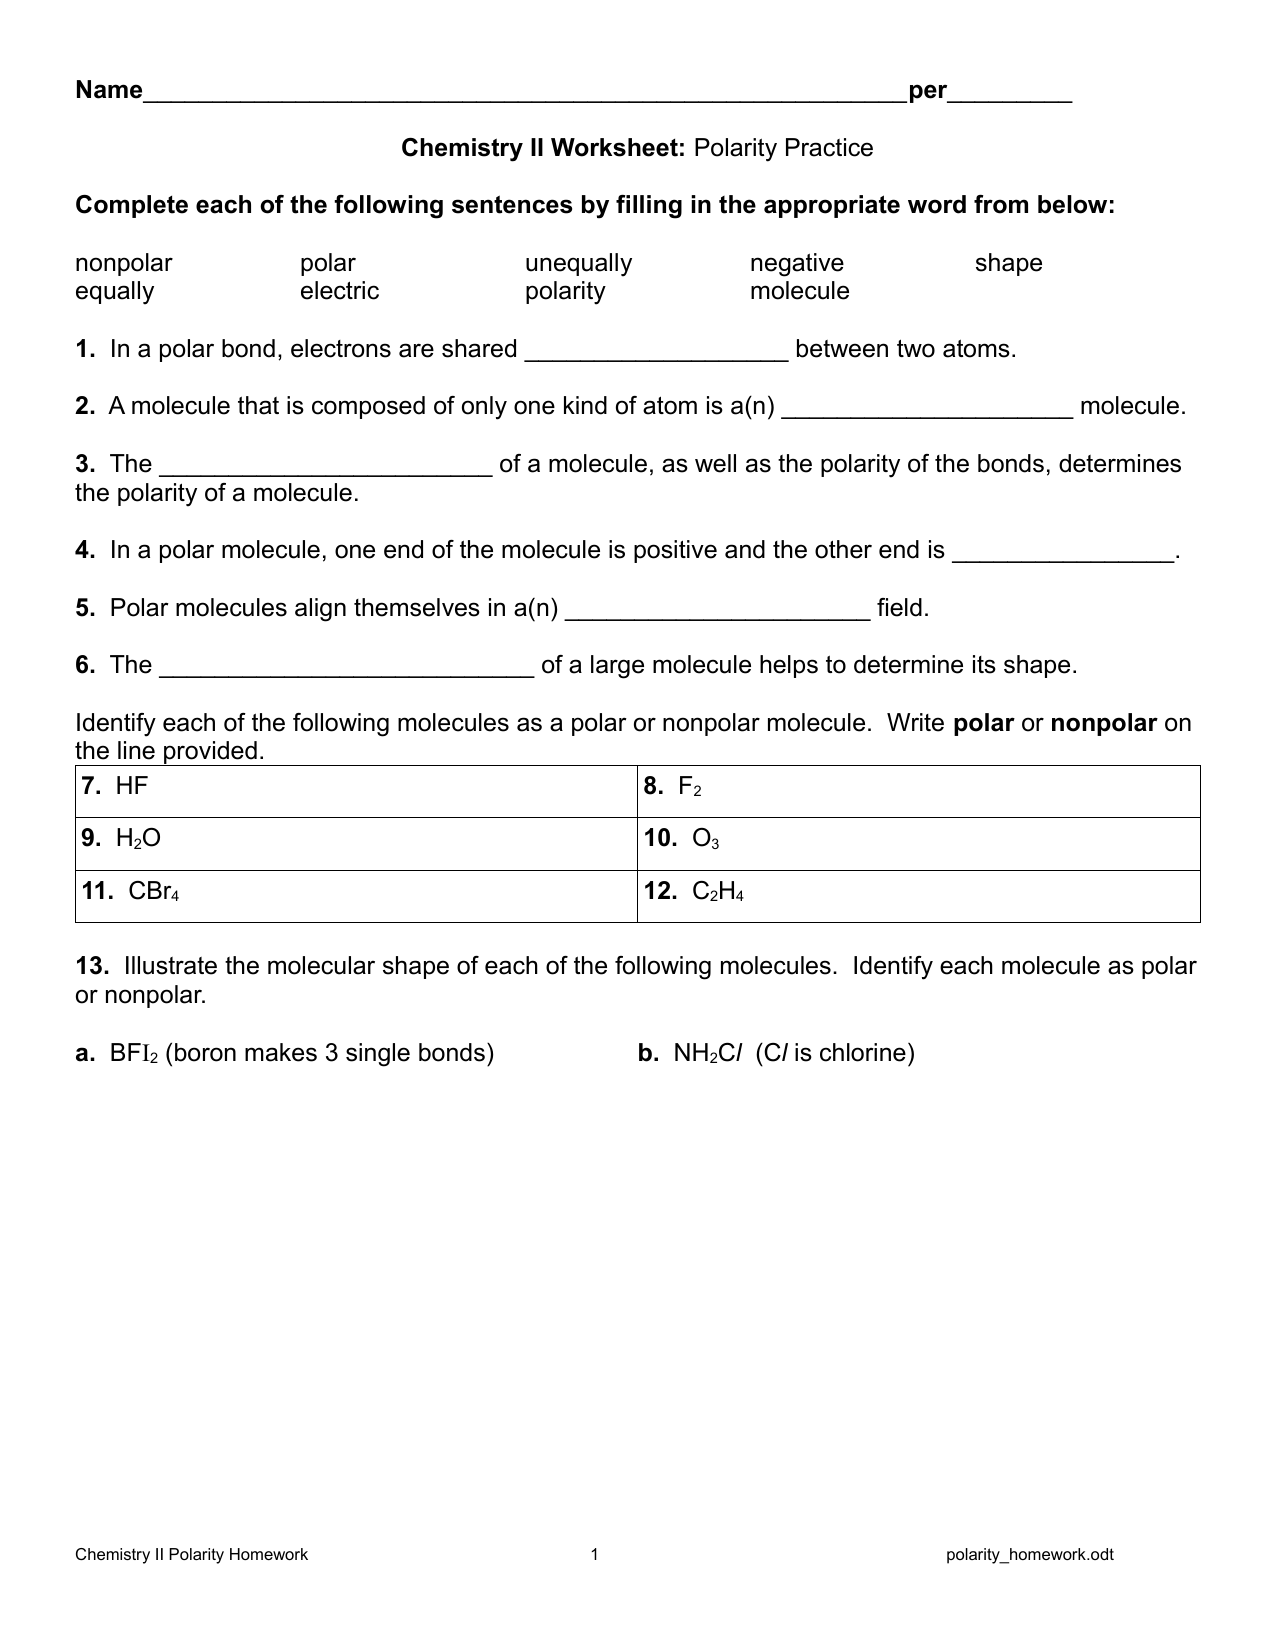 Chemistry II Polarity Homework Within Worksheet Polarity Of Bonds Answers